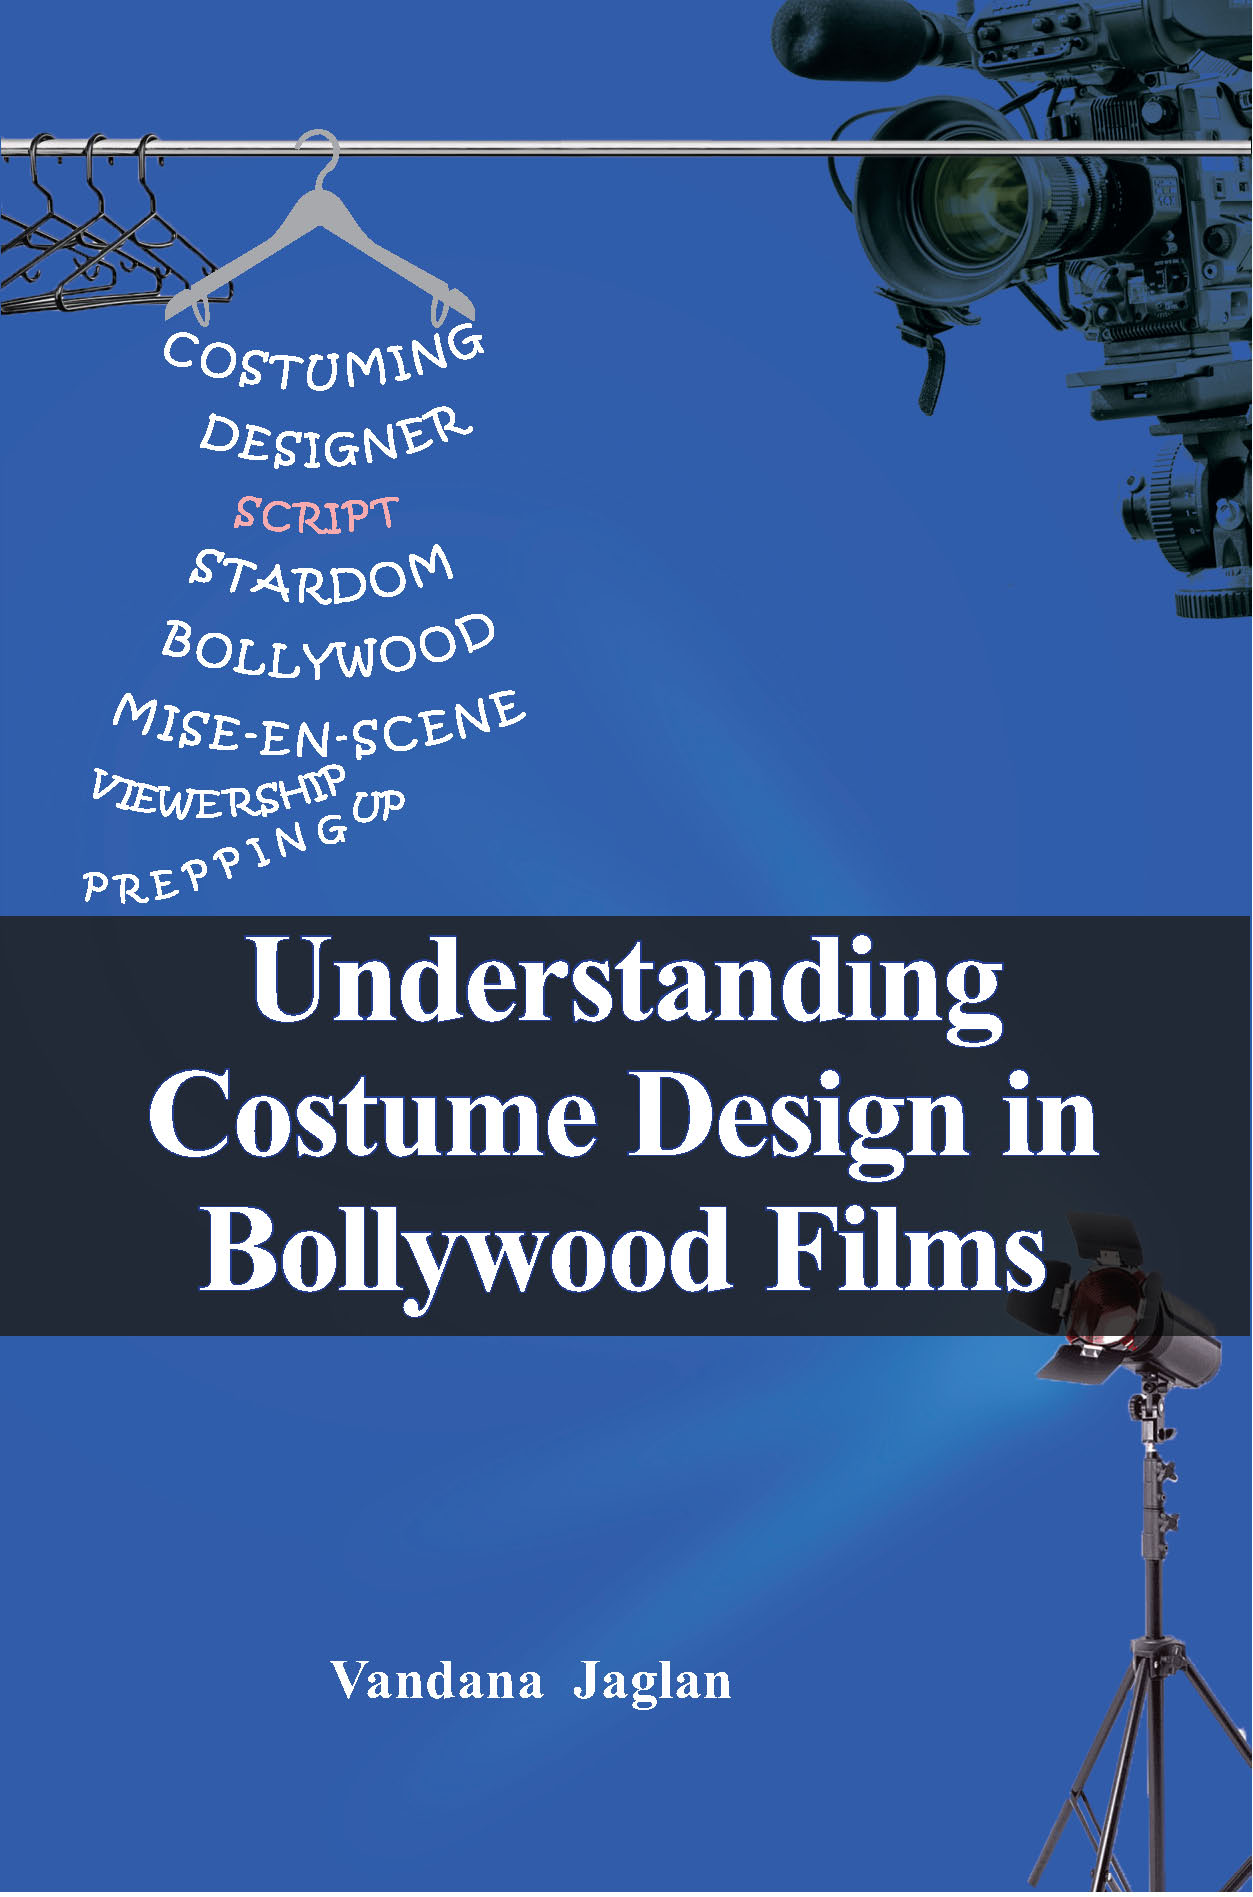 Understanding Costume Design in Bollywood Films Cover.jpg